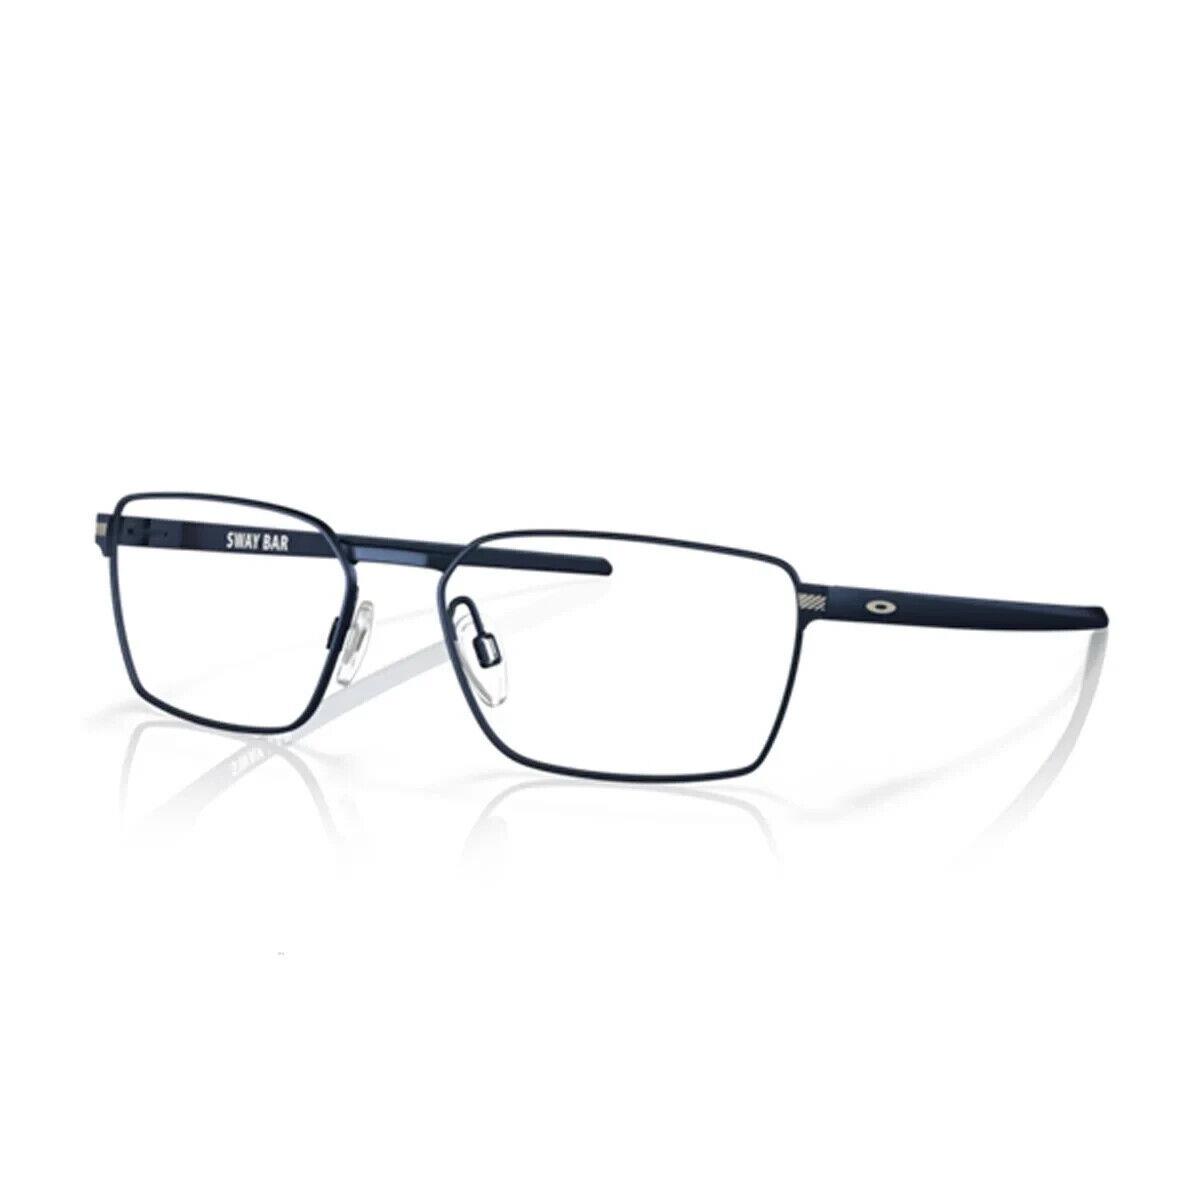 Oakley OX 5073 507304 55mm Sway Bar Blue Unisex Eyeglasses